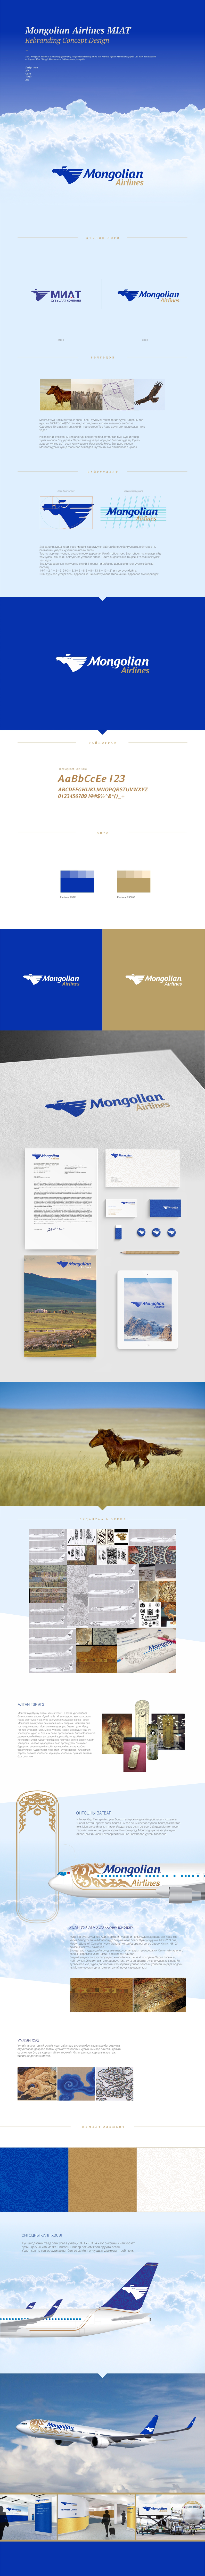 miat Mongolian Airlines rebranding concept mongolia Airways